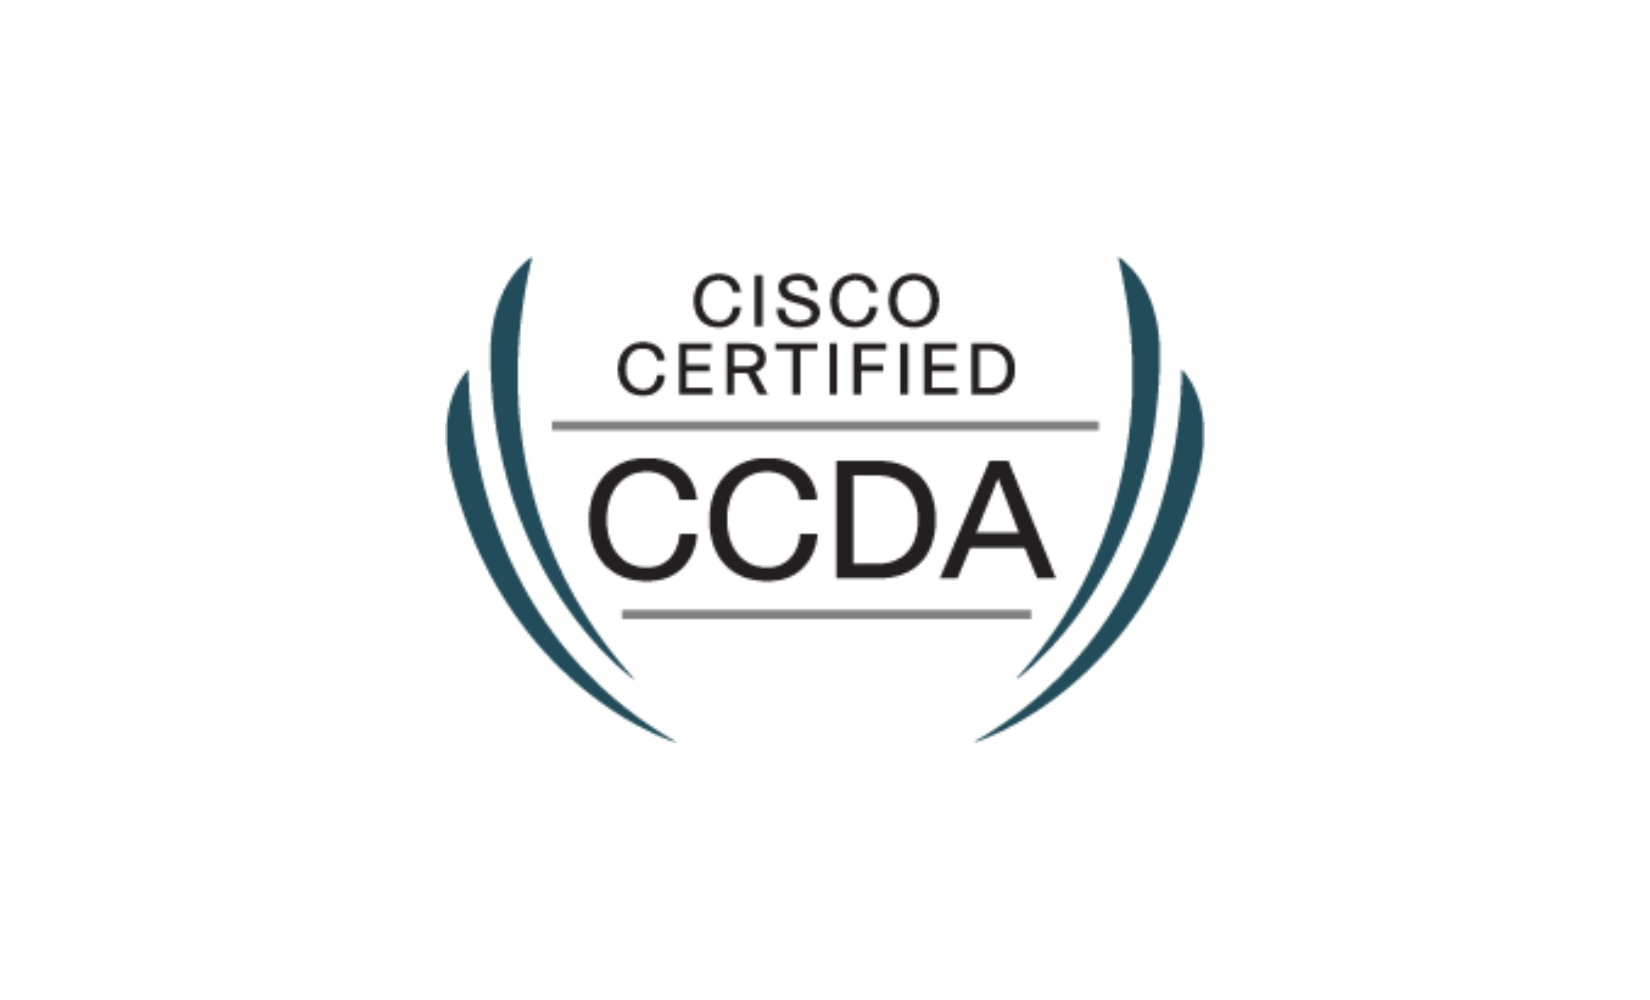 cisco certified ccda logo